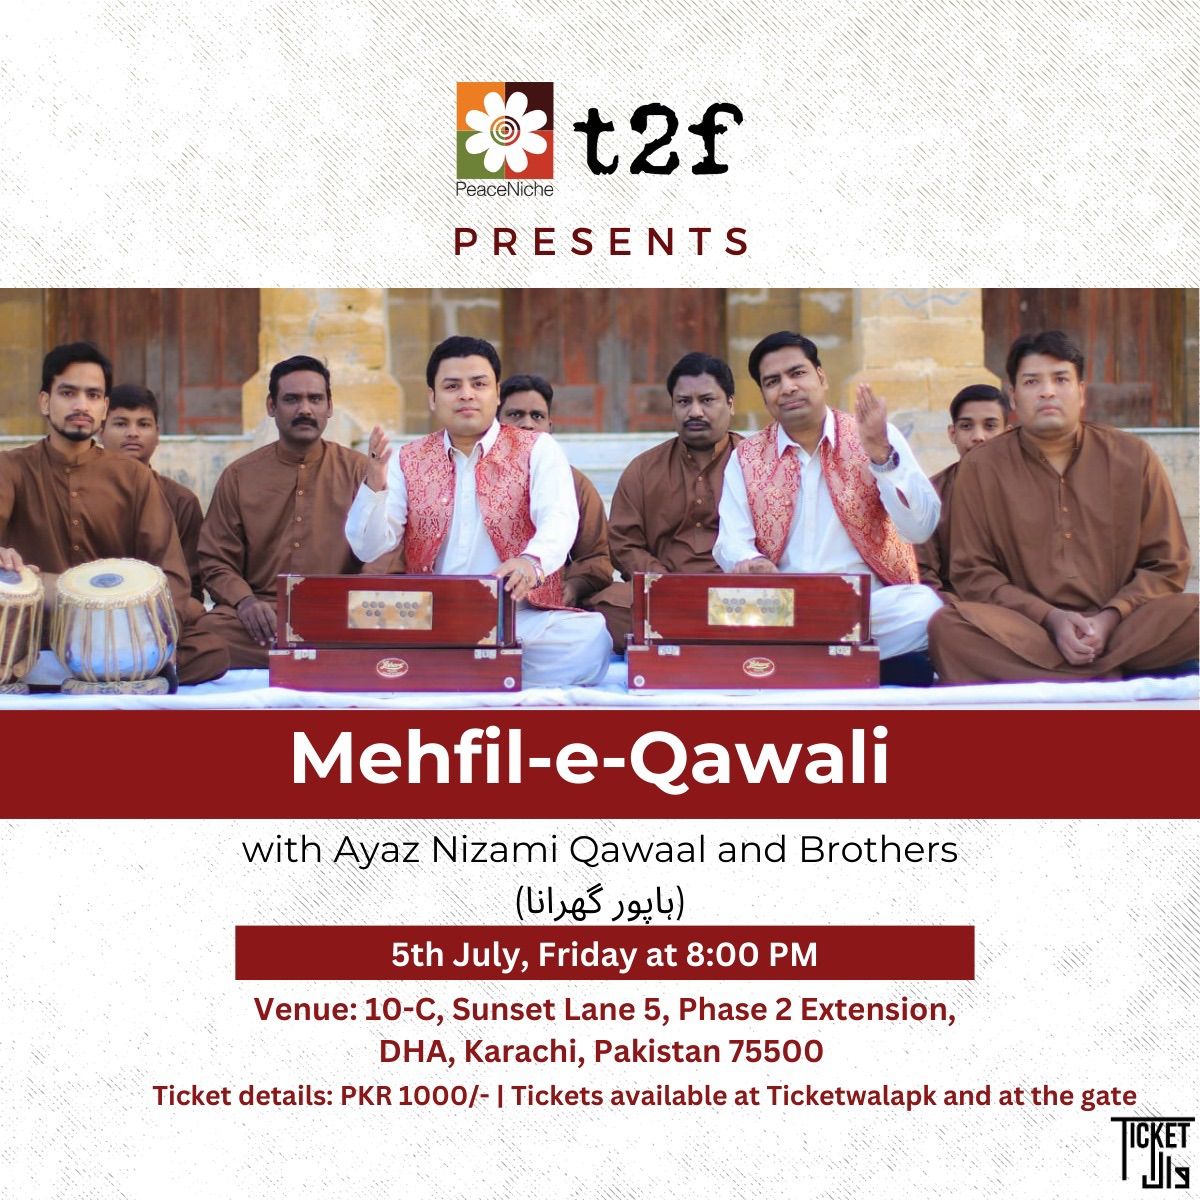 Mehfil-e-Qawali with Ayaz Nizami Qawaal and Brothers